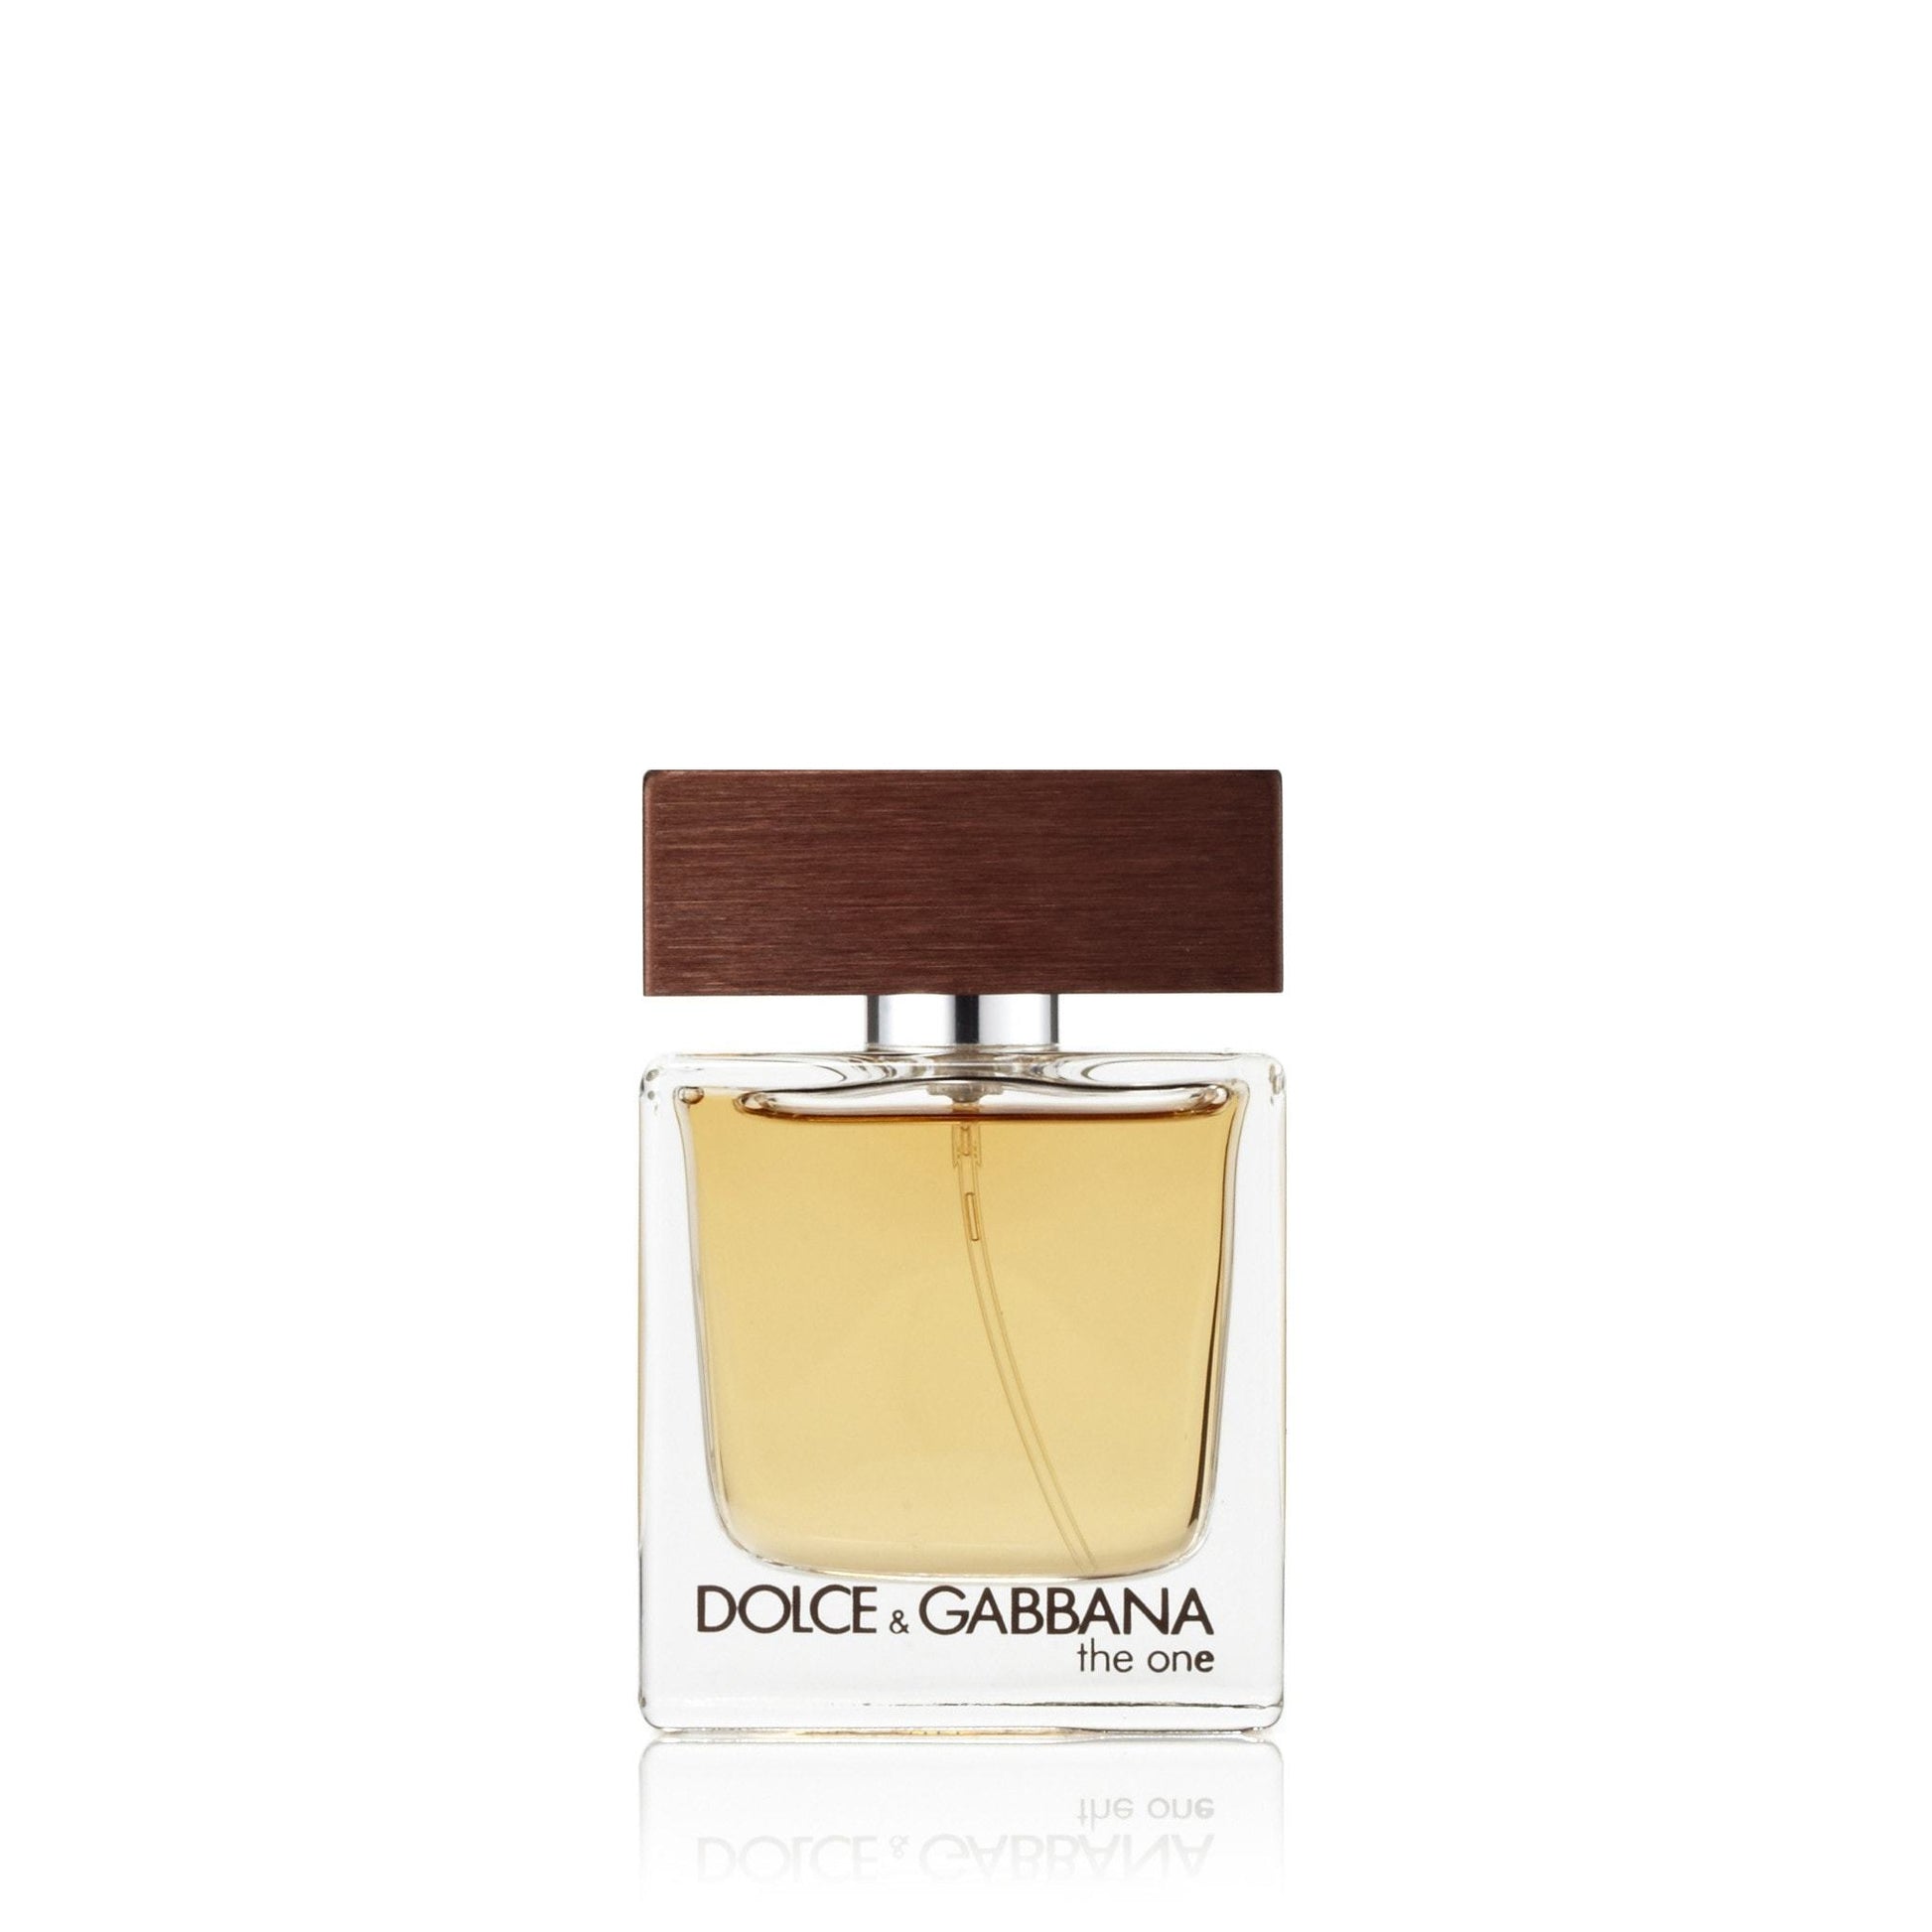 The One Eau de Toilette Spray for Men by Dolce & Gabbana, Product image 5